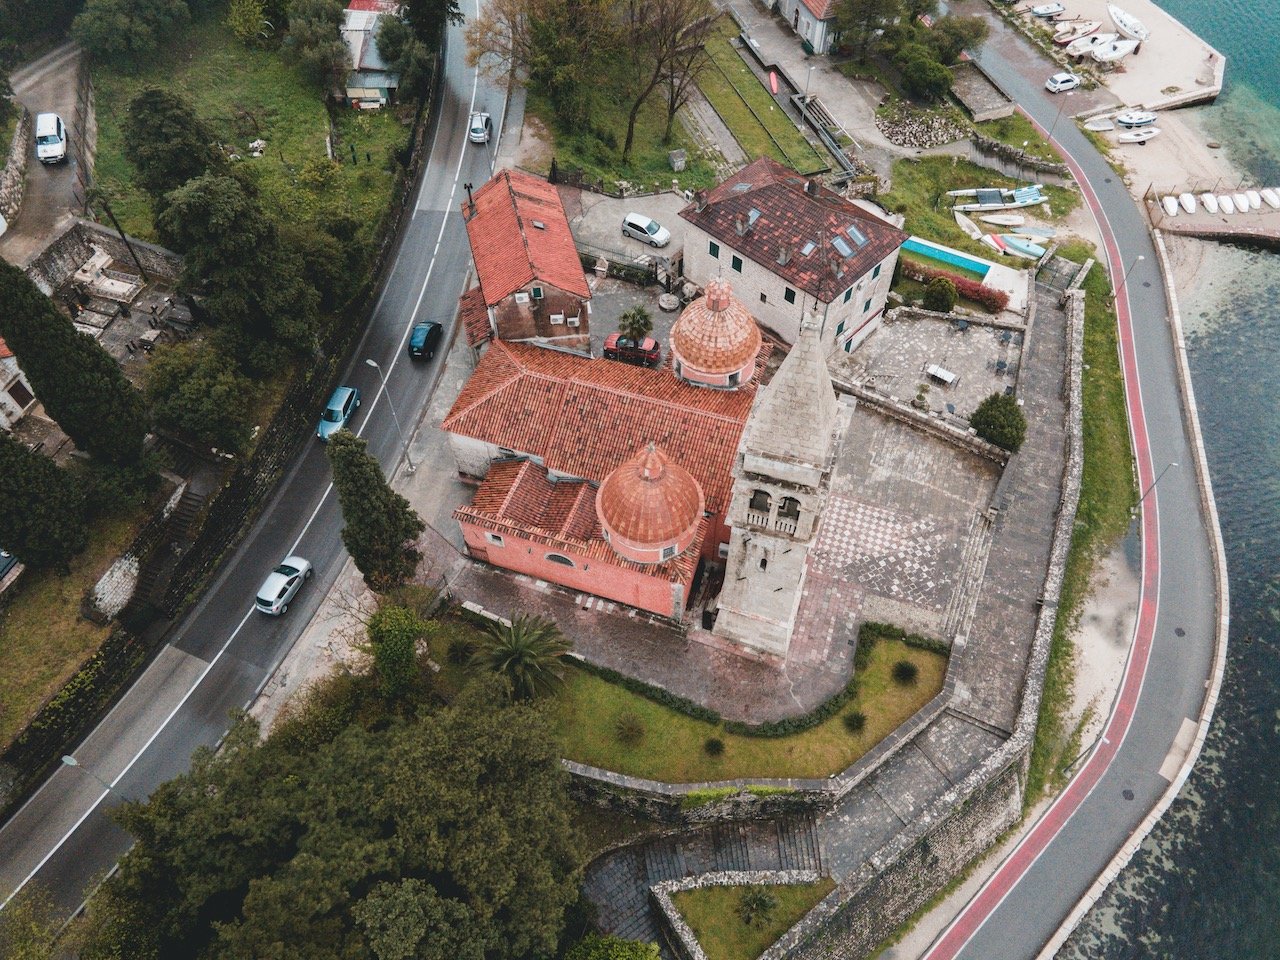   St. Matthias Church, Kotor, Montenegro (ISO 400, 4.5 mm,  f /2.8, 1/160 s)  